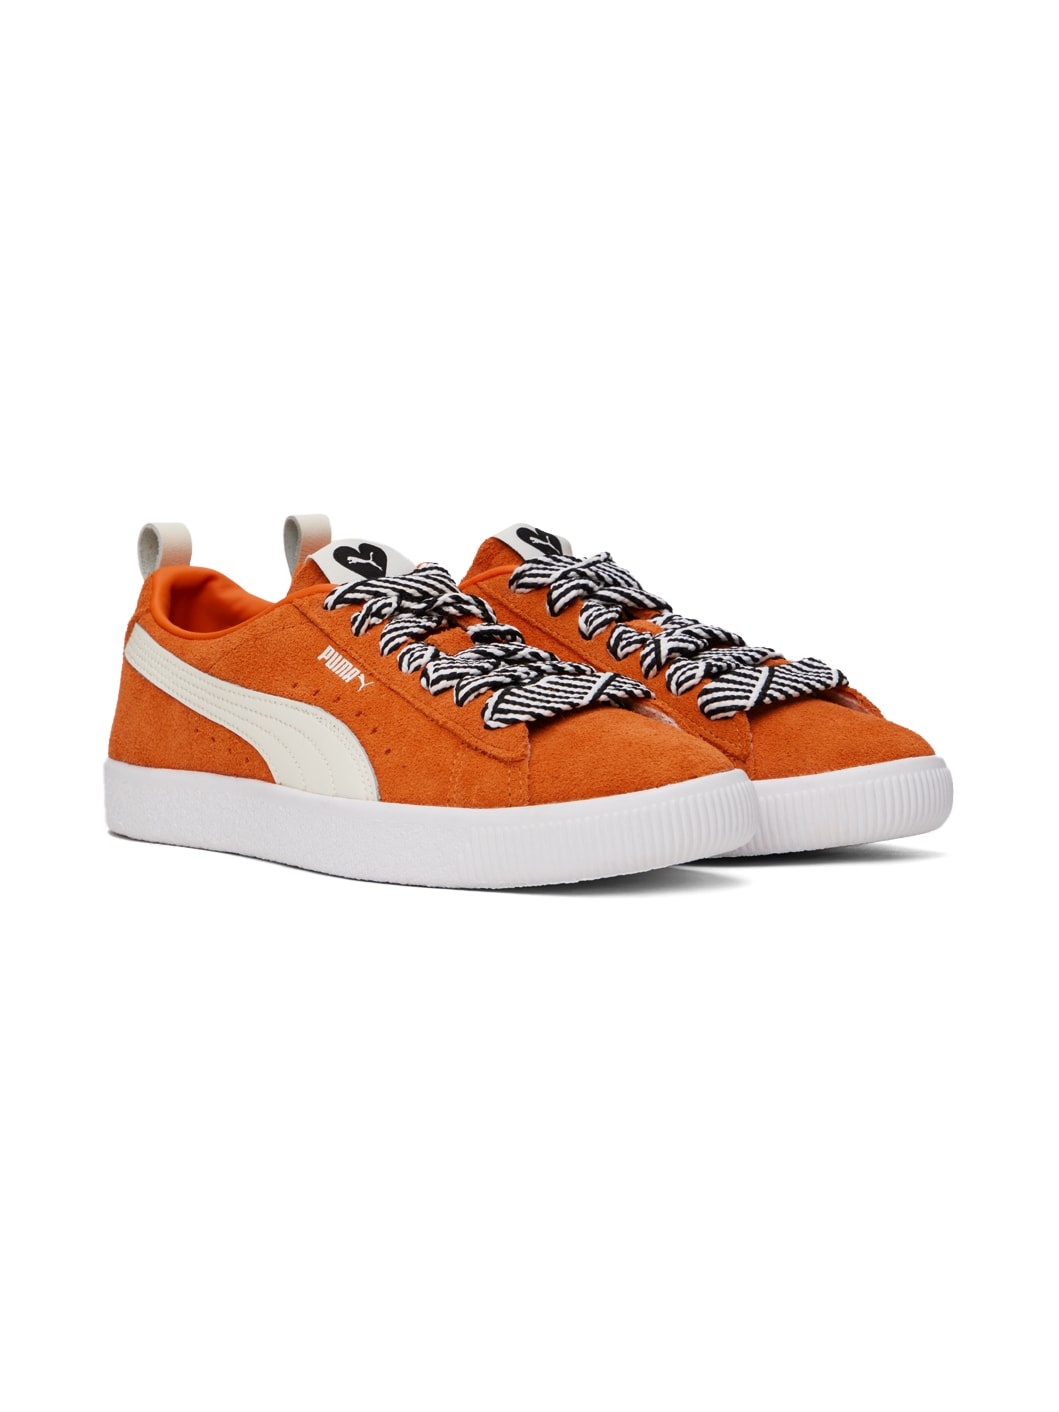 Orange Puma Edition VTG Sneakers - 4